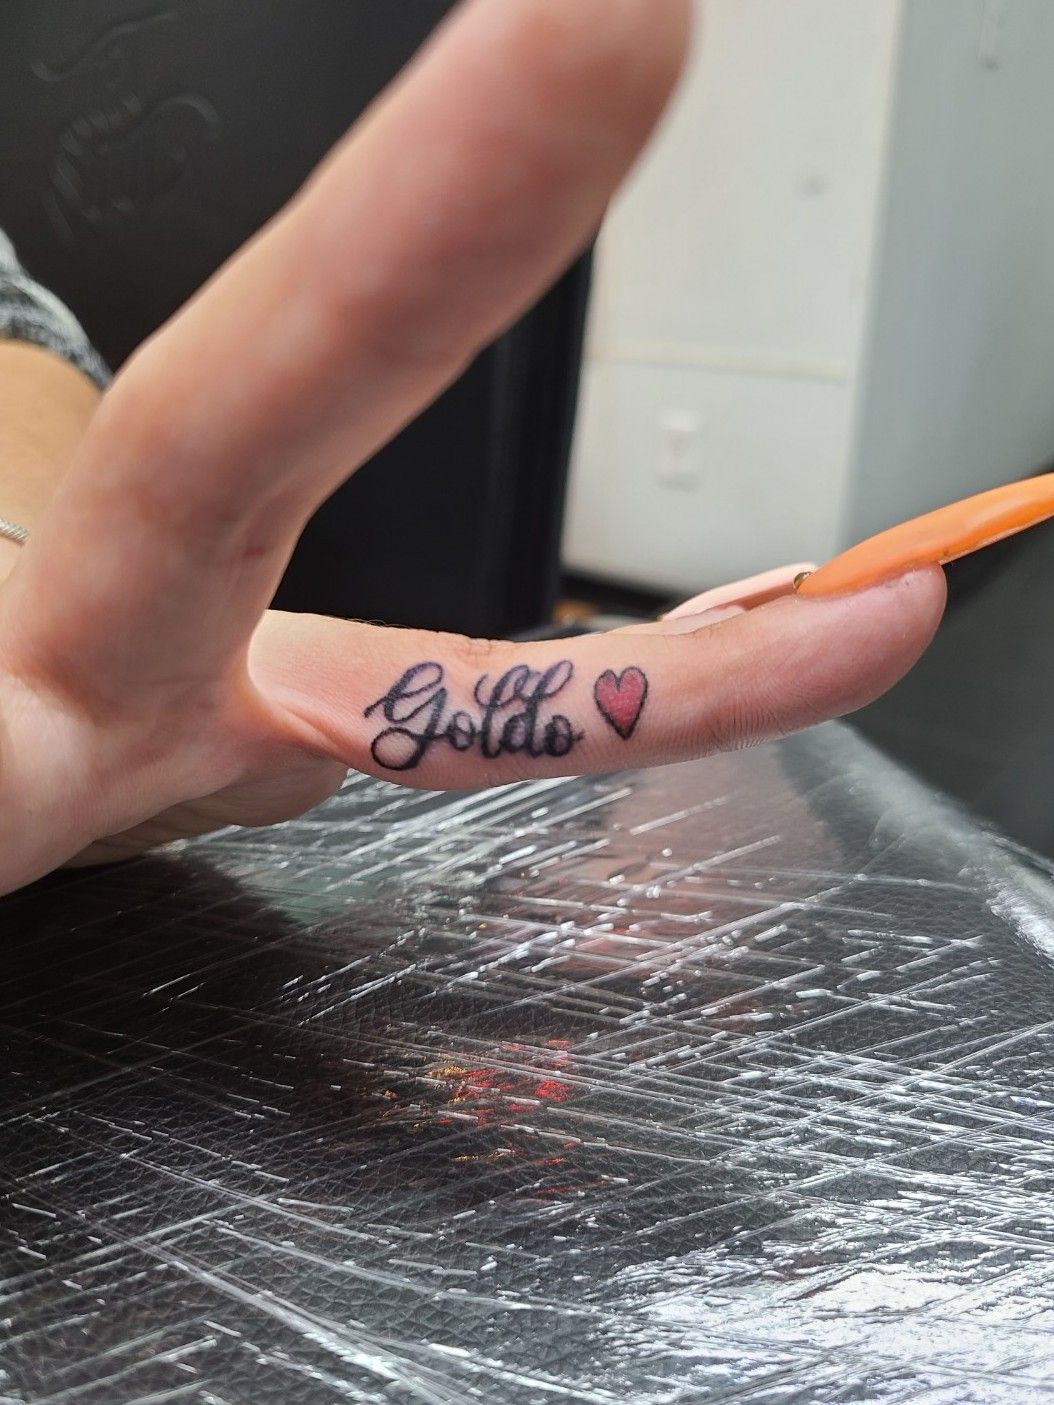  Sushmita name mehndi tattoo     mehandiartist mehandilove  mehendi hennastain hennaaddict hennatattoo hennalove  Instagram